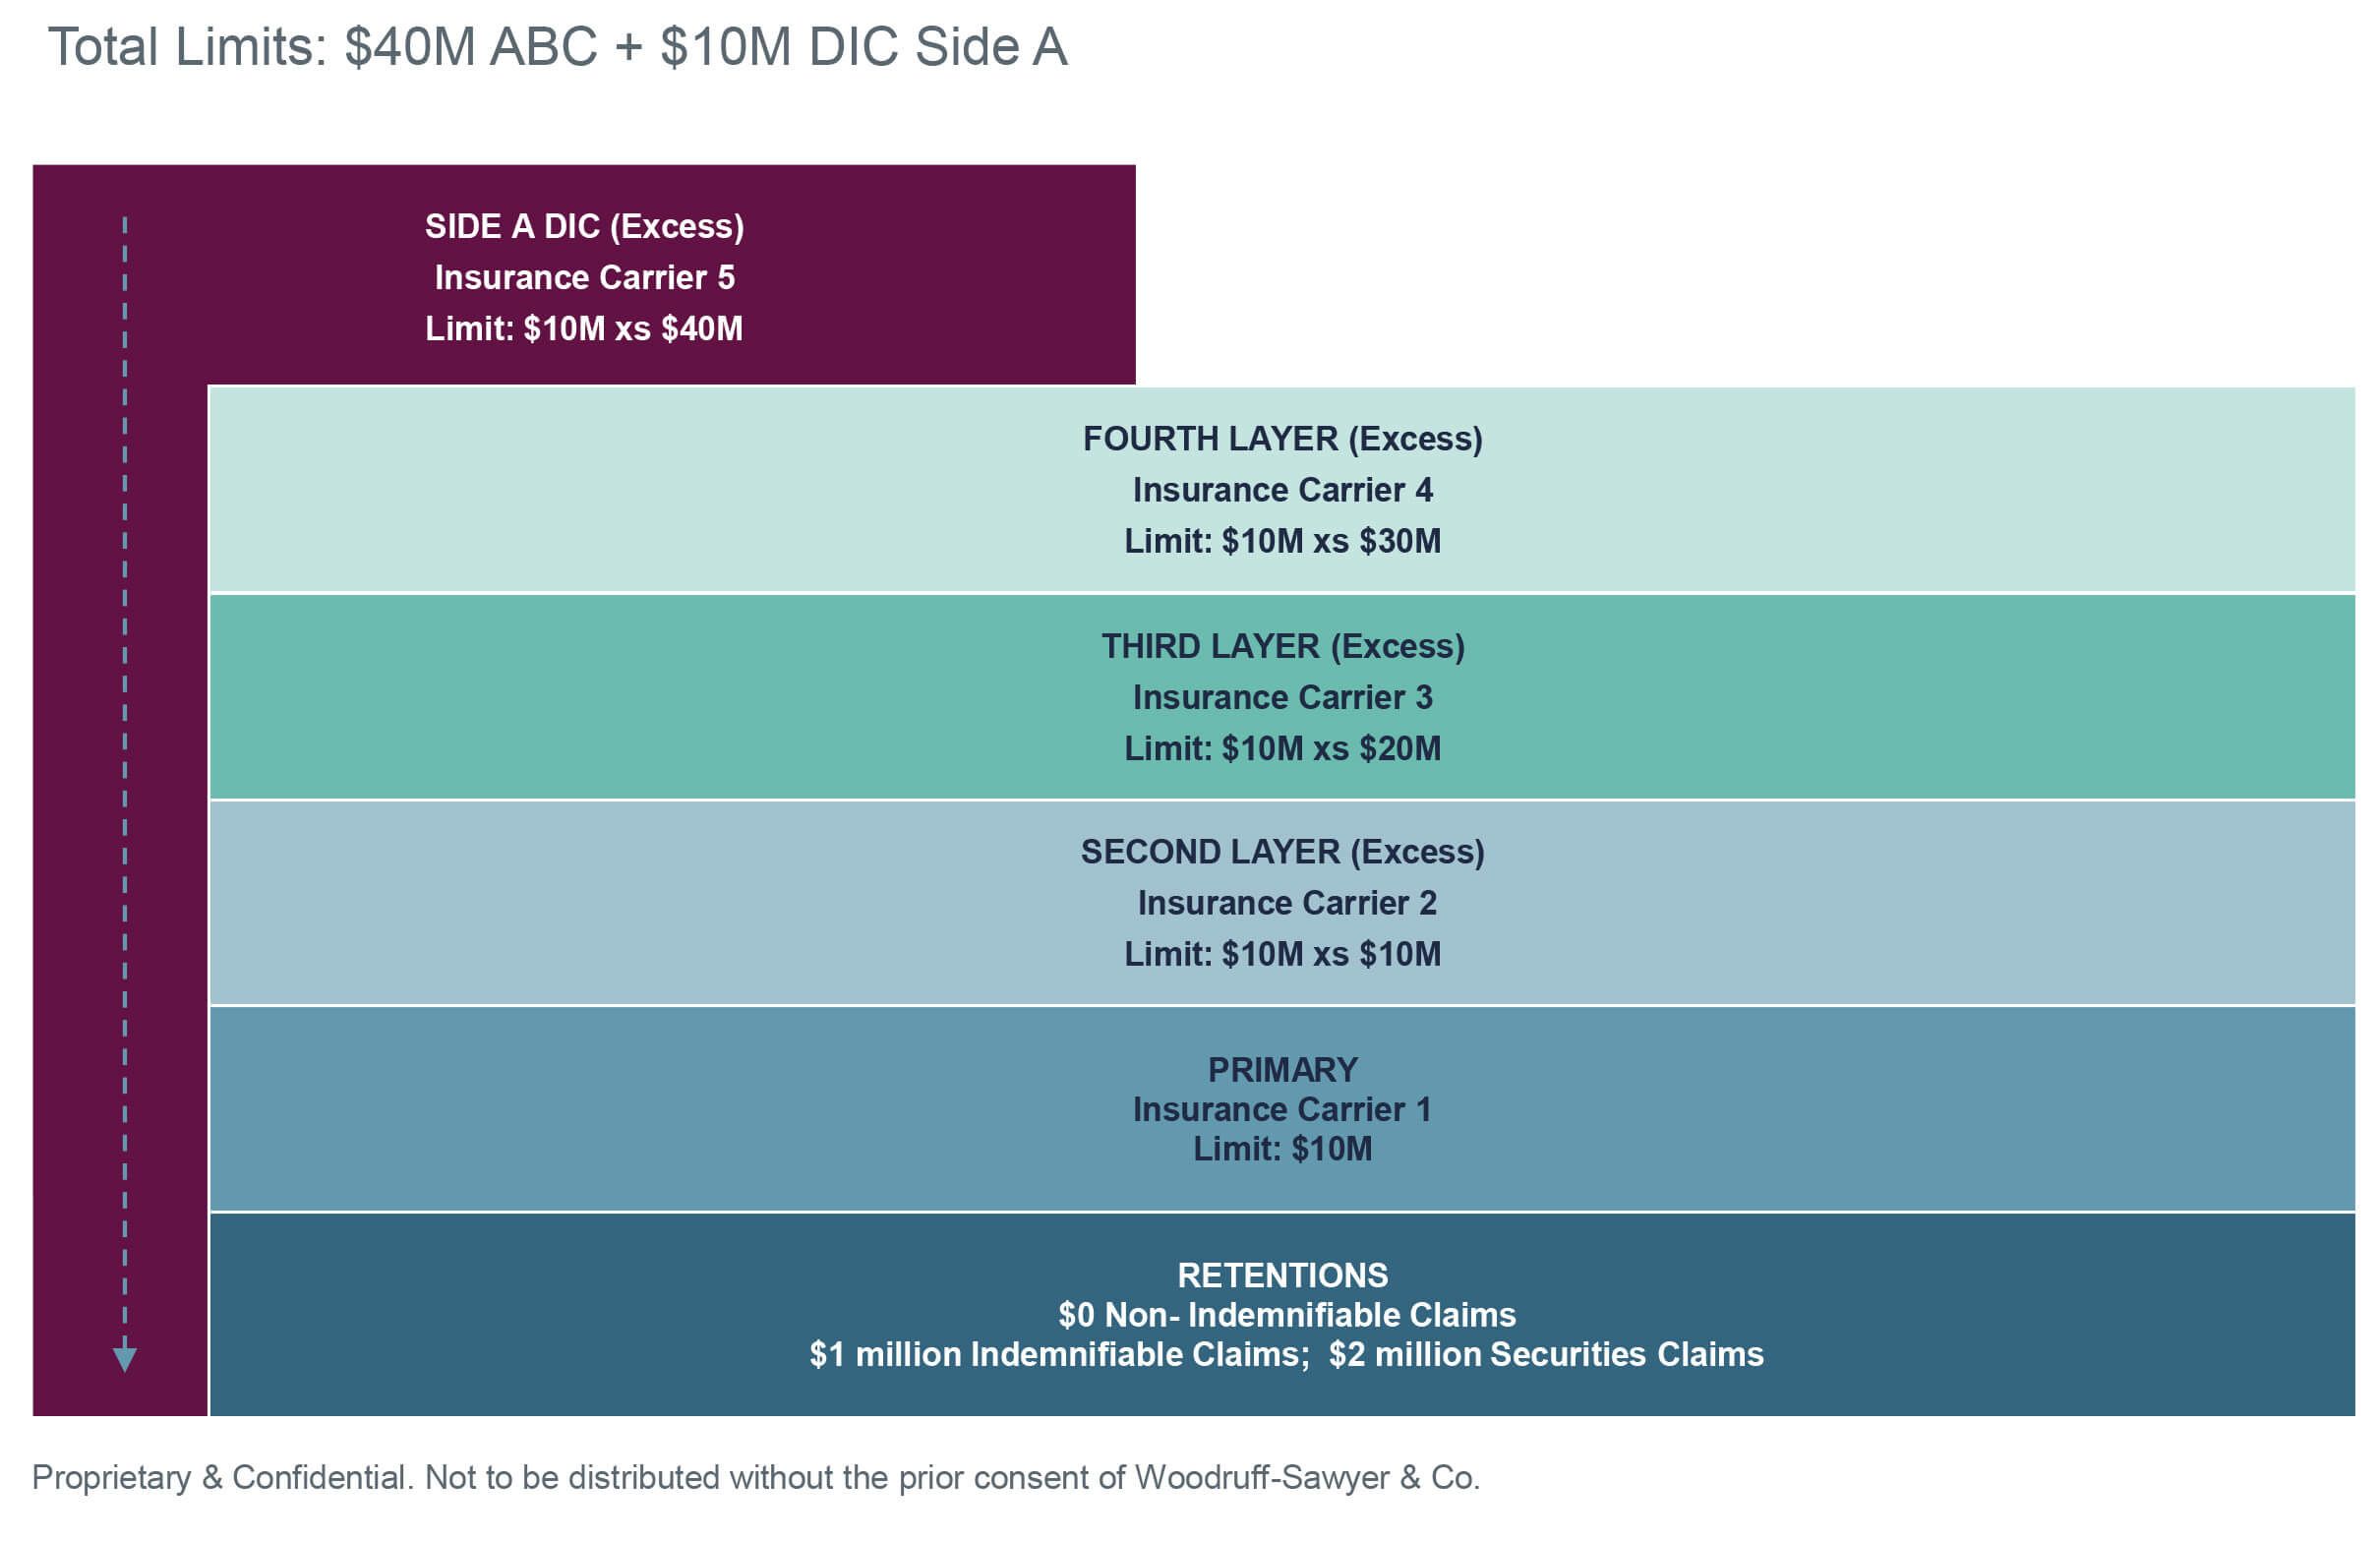 Sample D&O insurance program, total limits $40M ABC + $10M DIC Side A